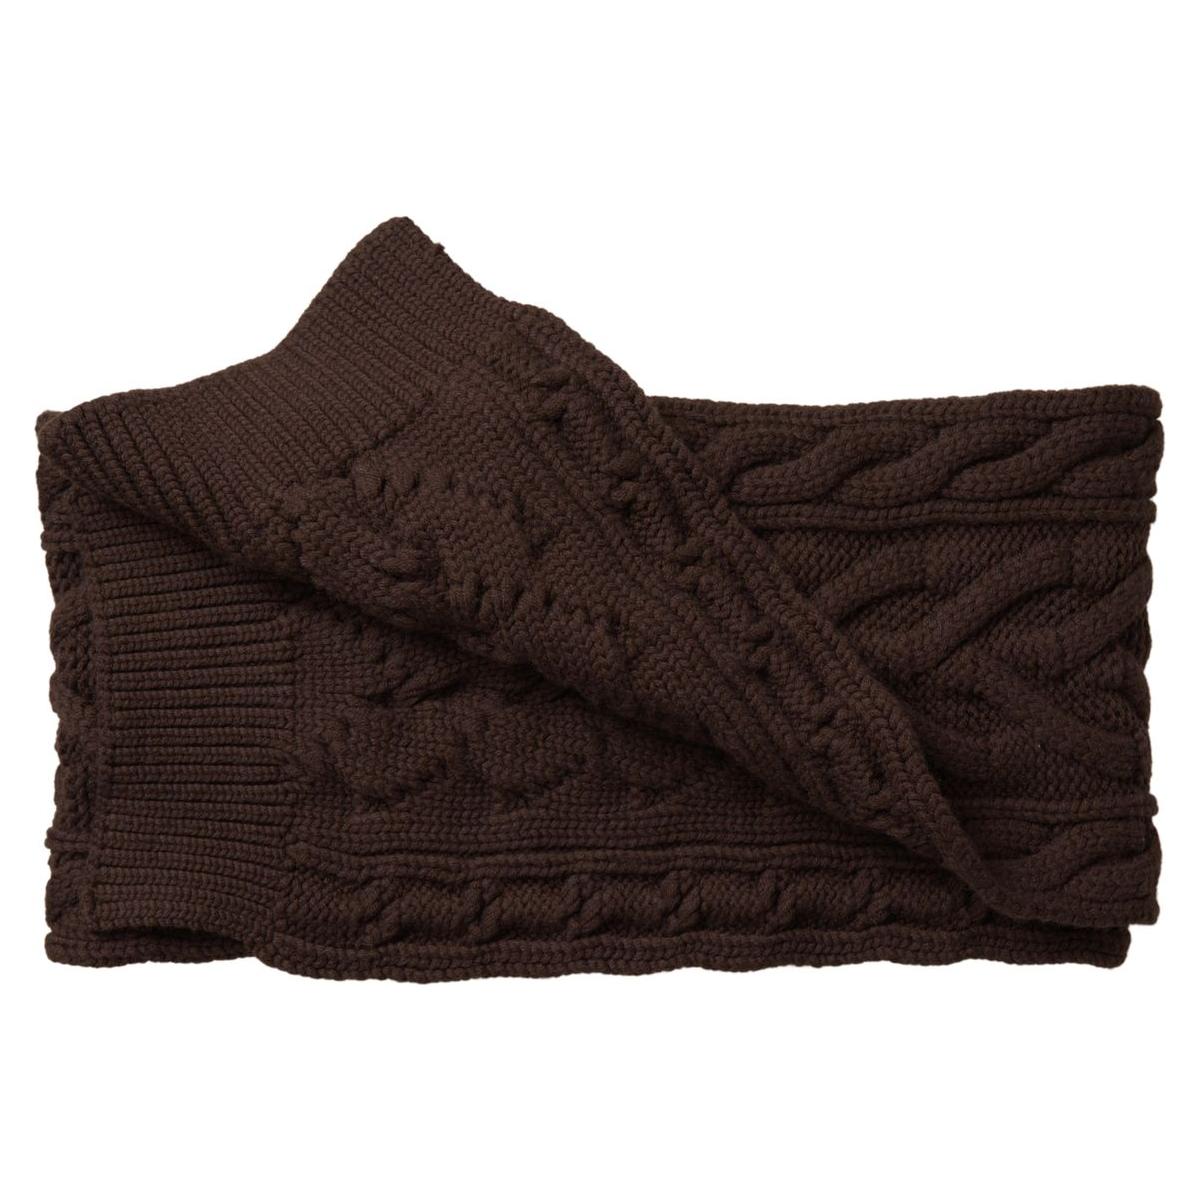 Dolce & Gabbana Elegant Cashmere Wool Blend Scarf brown-cashmere-knit-neck-wrap-shawl-scarf 465A3573-113241b9-b8a.jpg